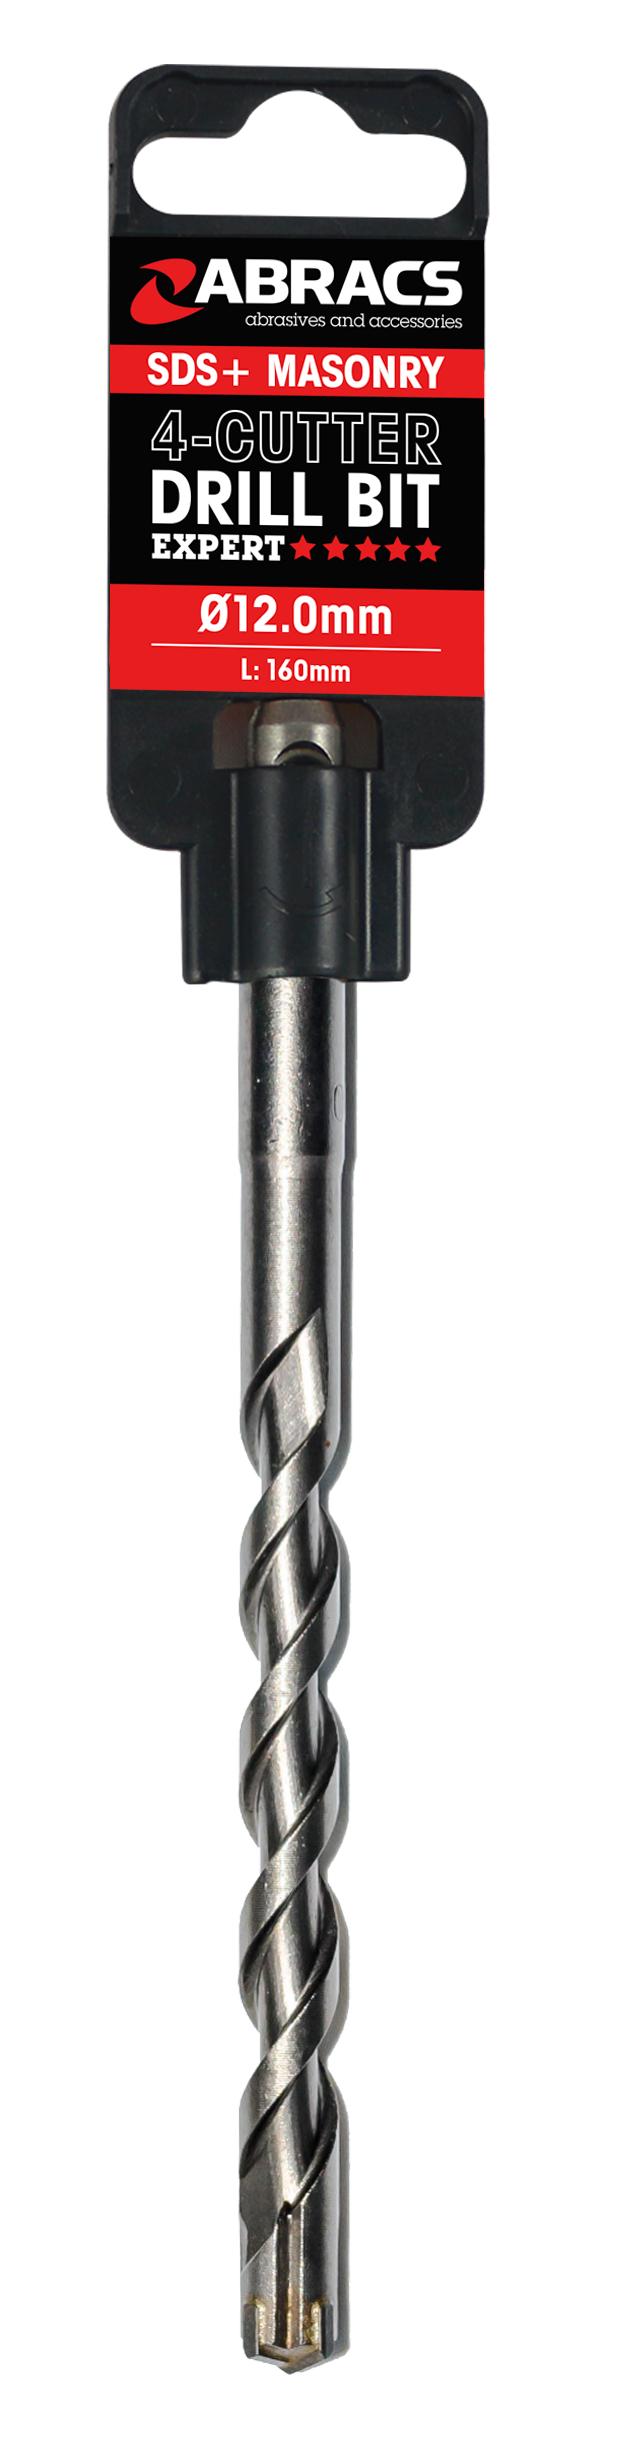 DBCX055160 5.5mm x 160mm SDS+ Masonry Drill Bit - 4 Cutter